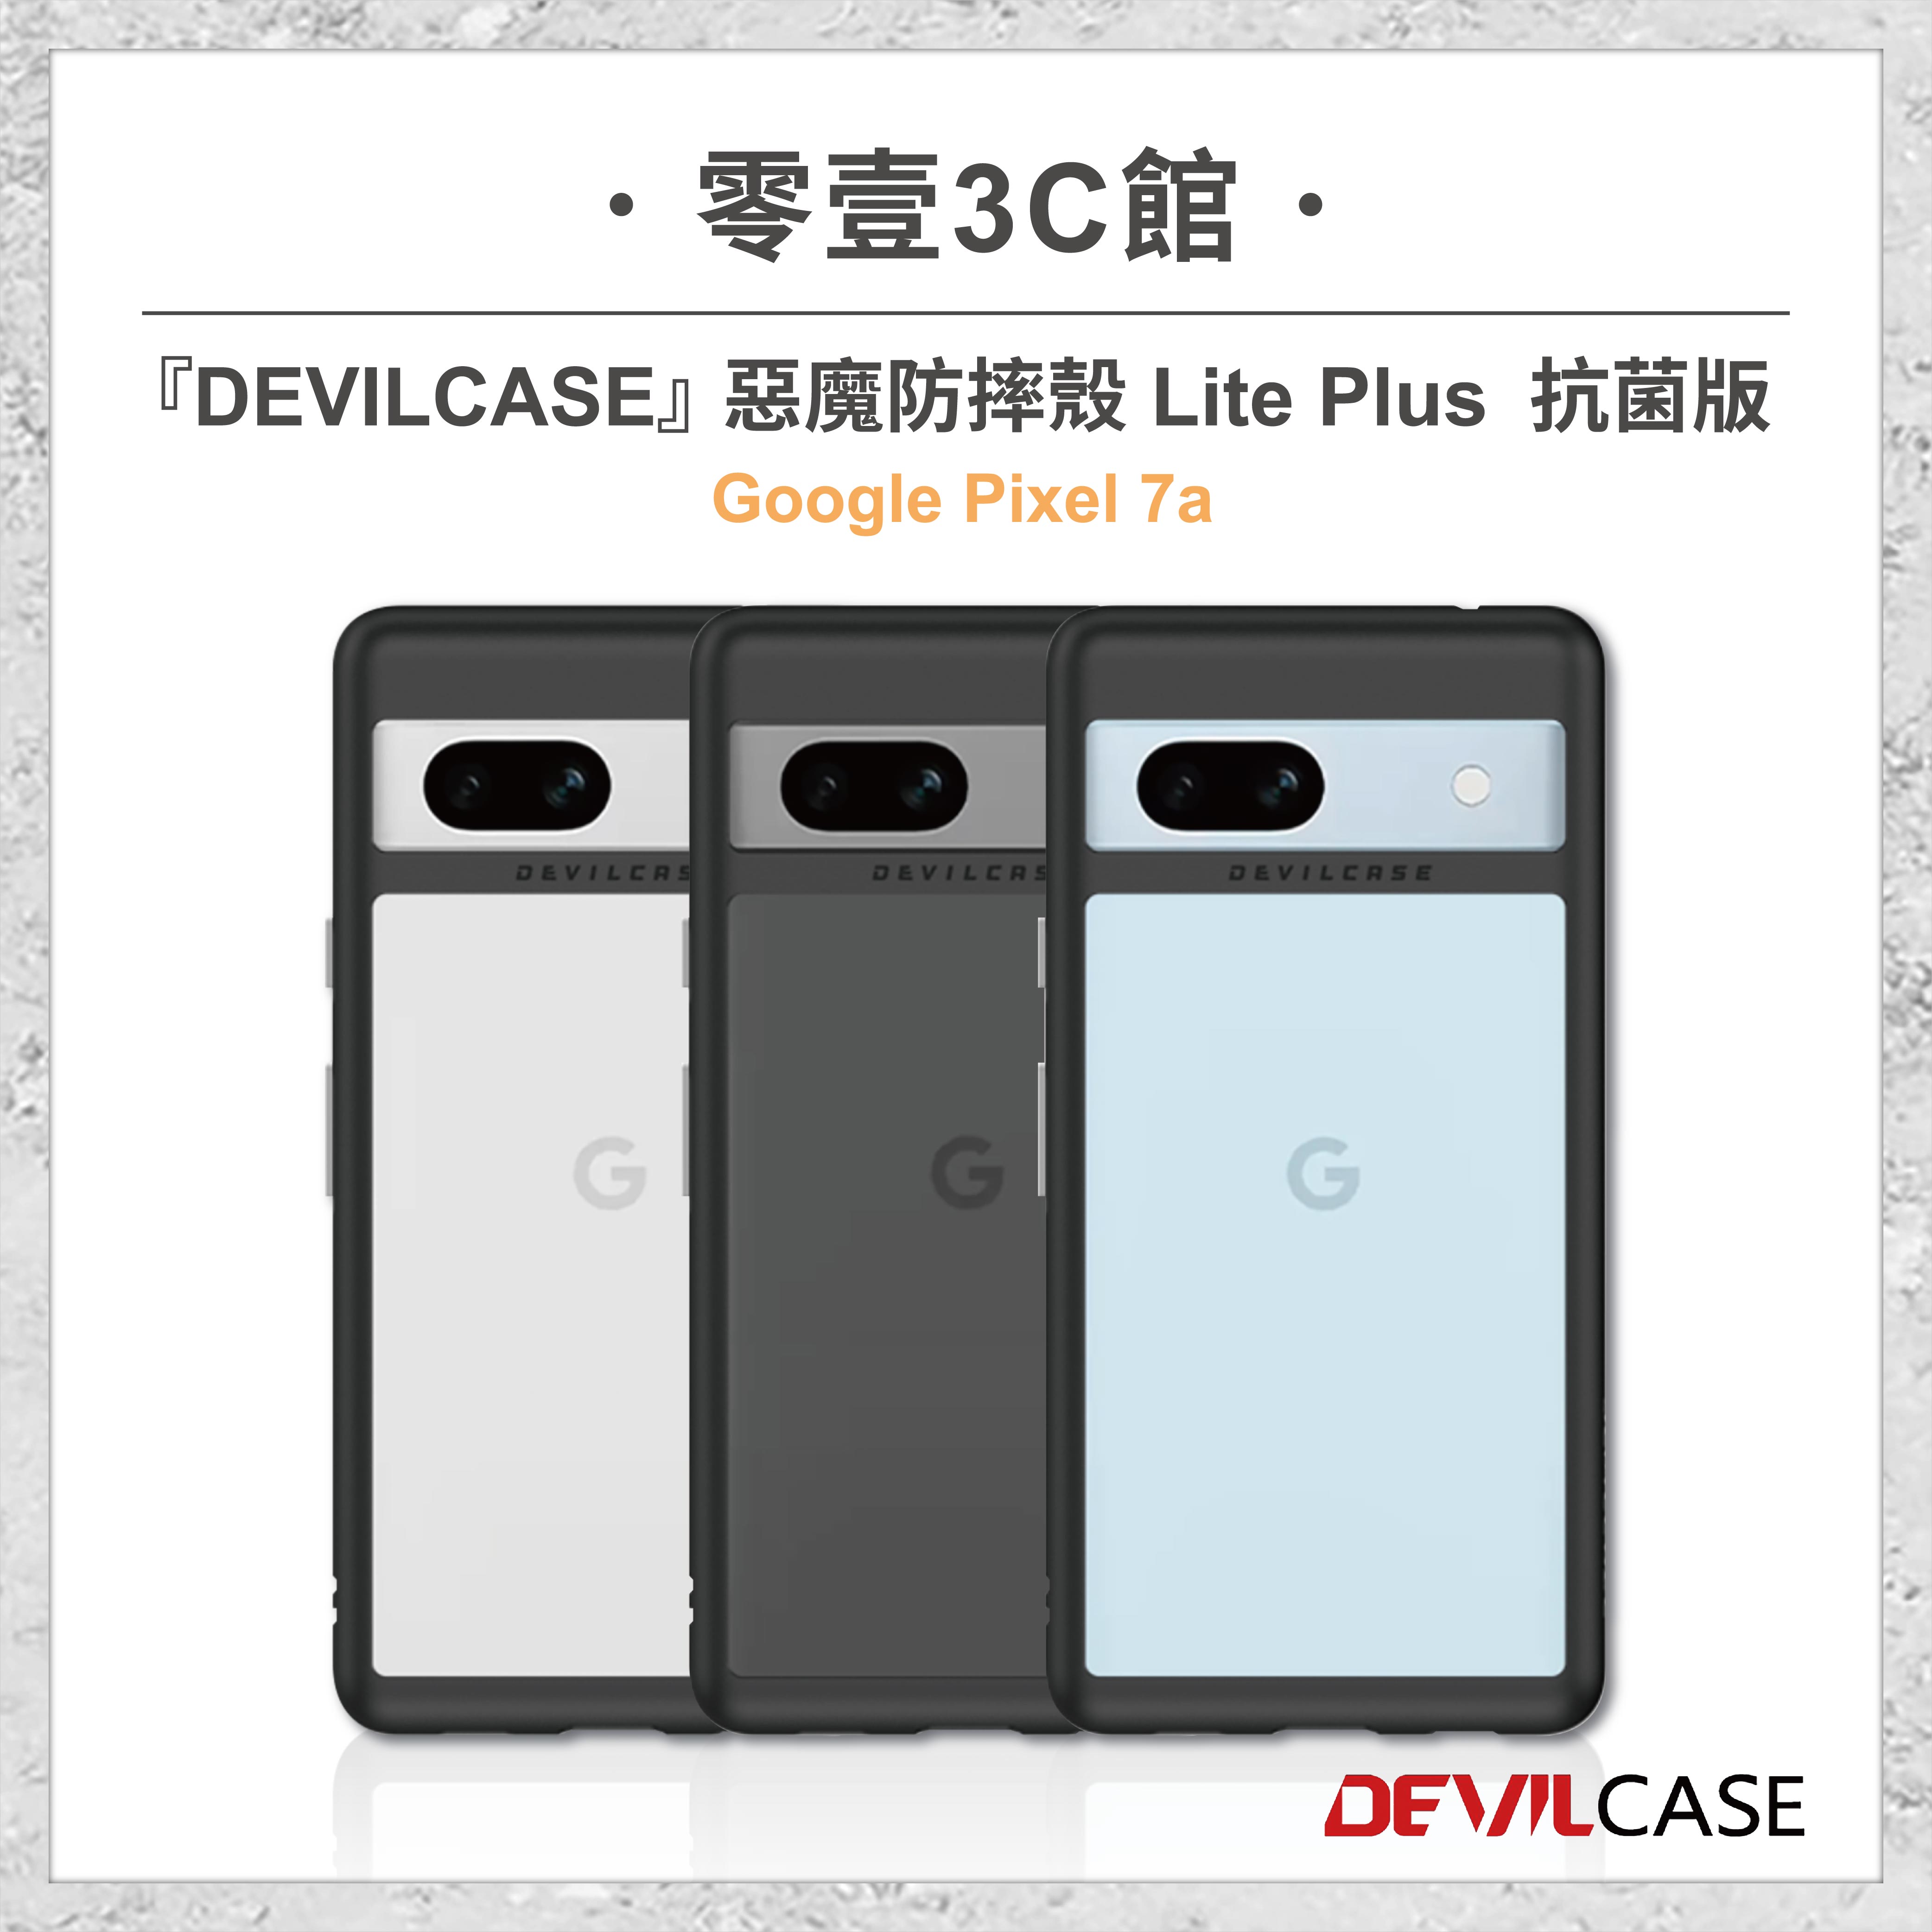 【DEVILCASE】Google Pixel 7a 惡魔防摔殼 Lite Plus 抗菌版 全新防摔殼 防摔殼 手機殼